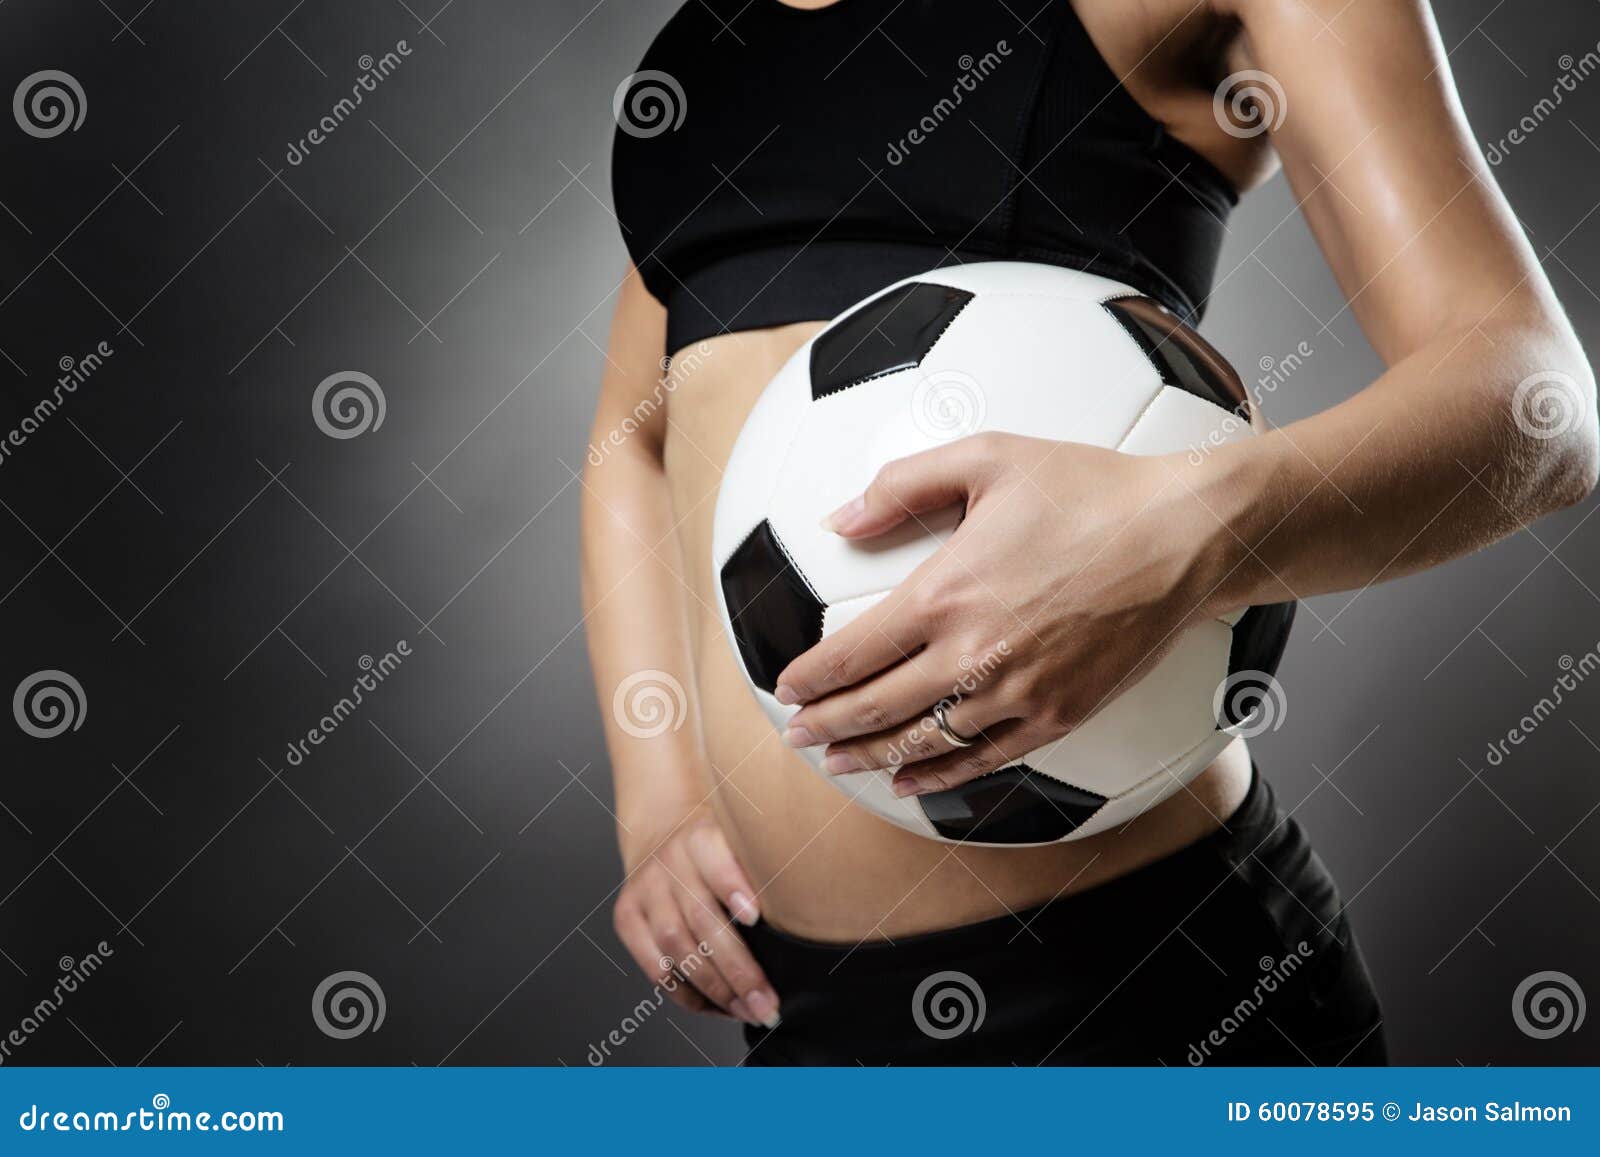 Football stock image. Image of holding, football, sport - 60078595